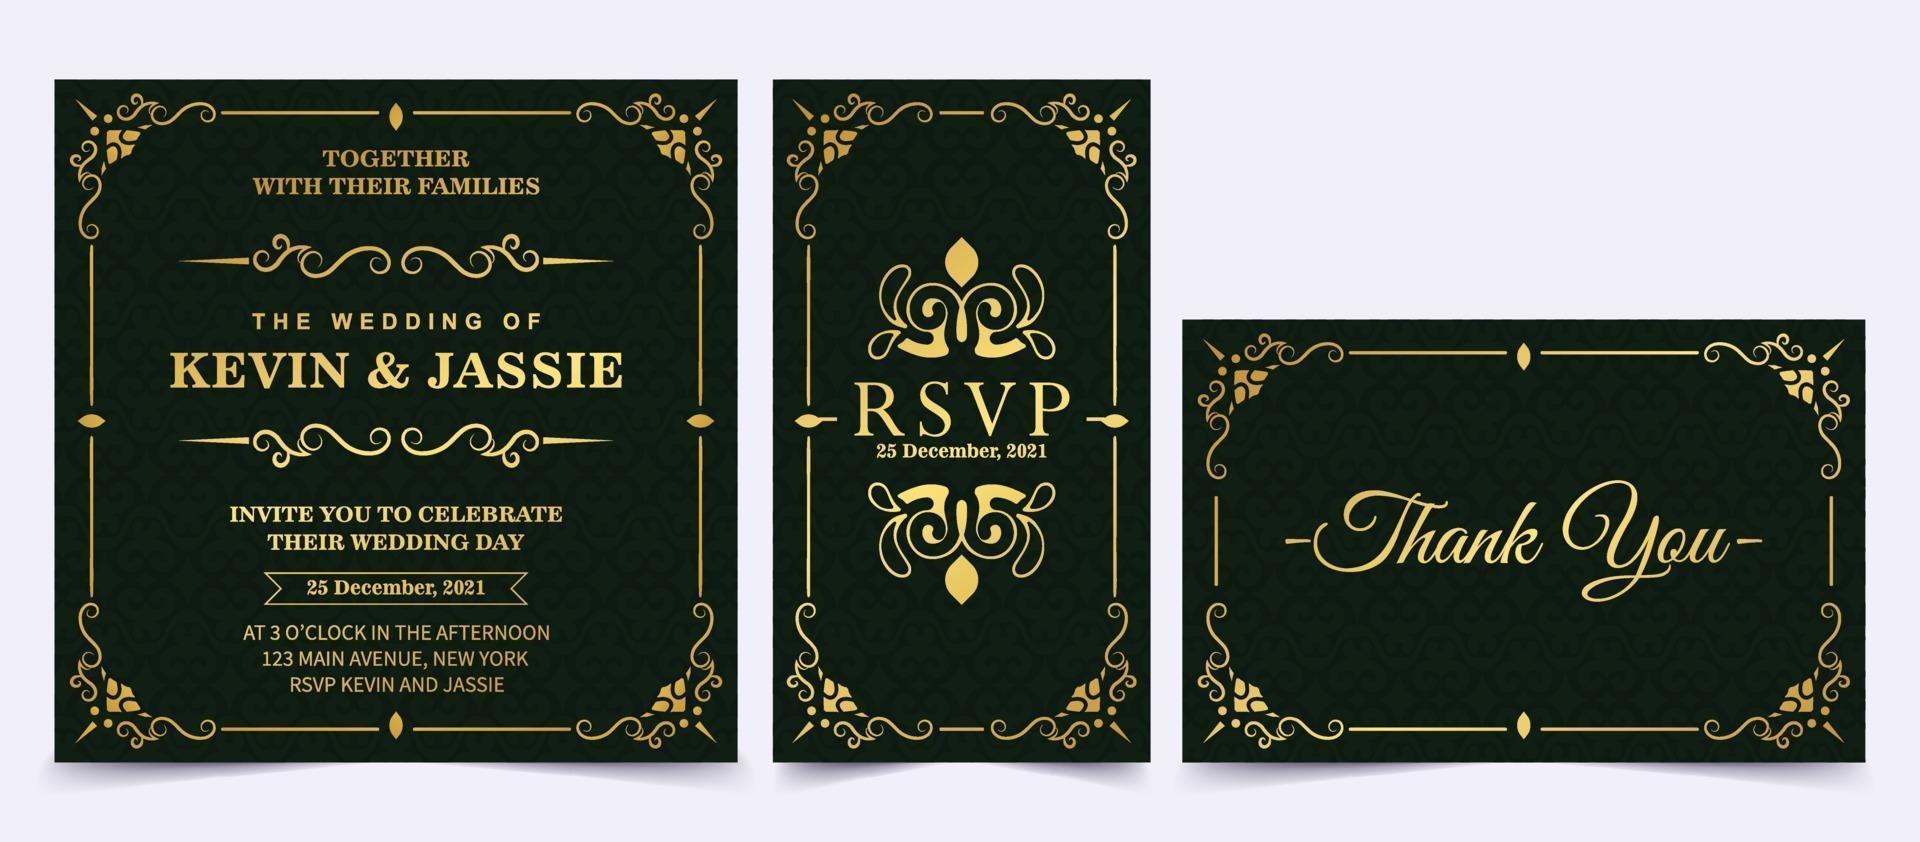 luxury dark invitation card with frame ornament style vector